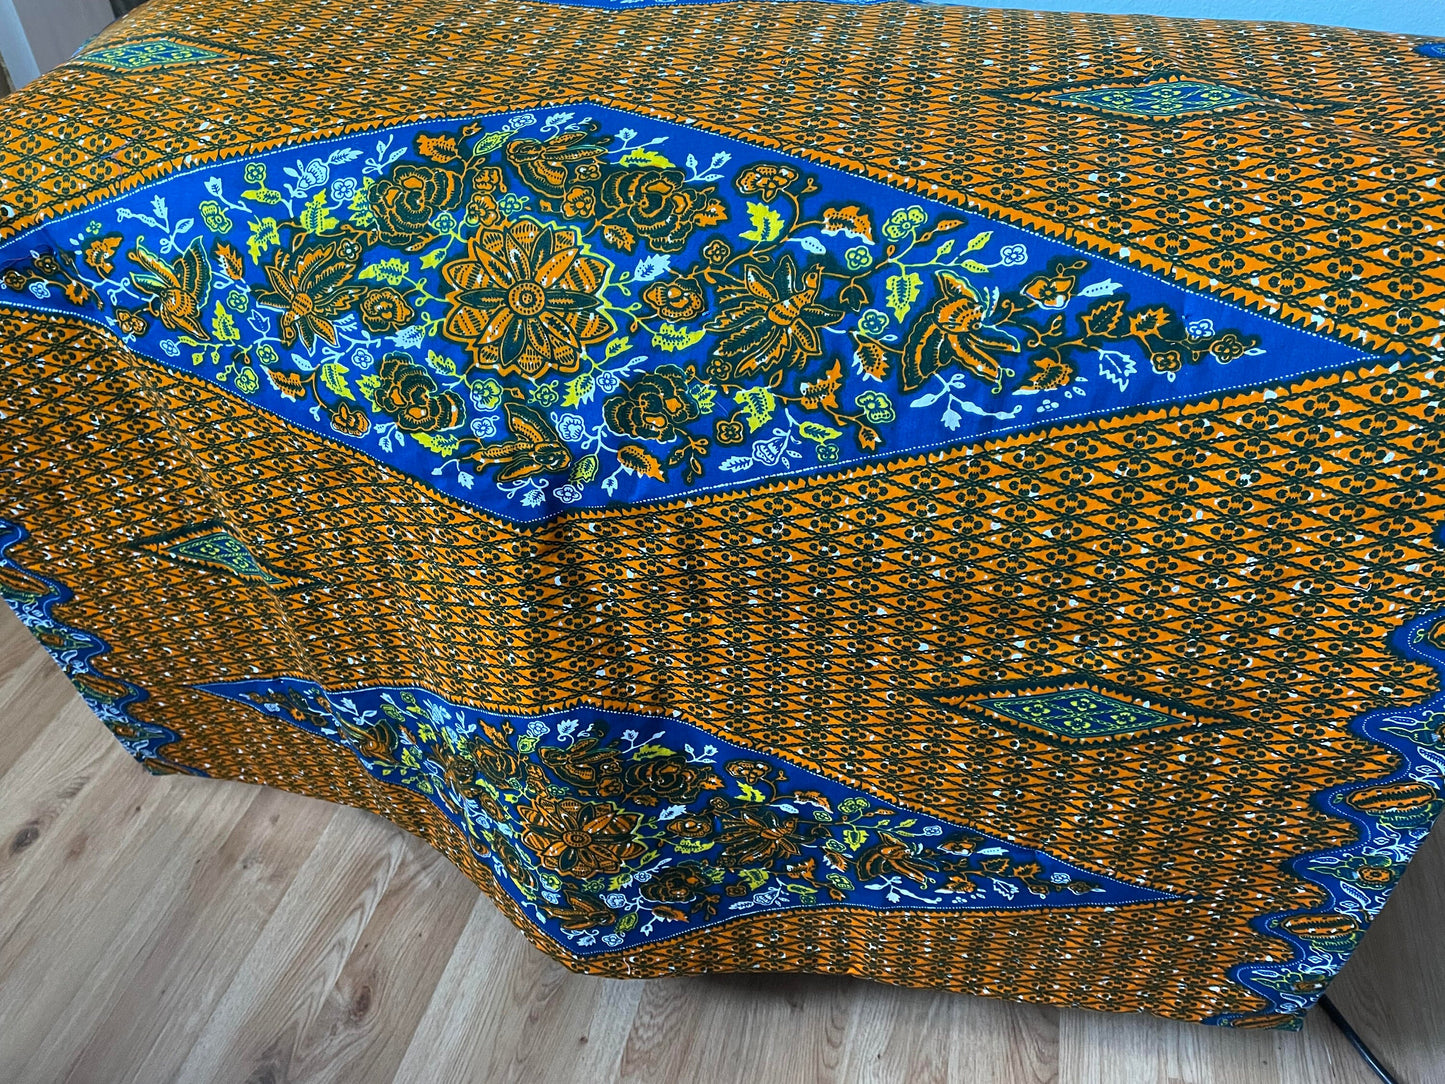 Rare African Lap quilt/blanket